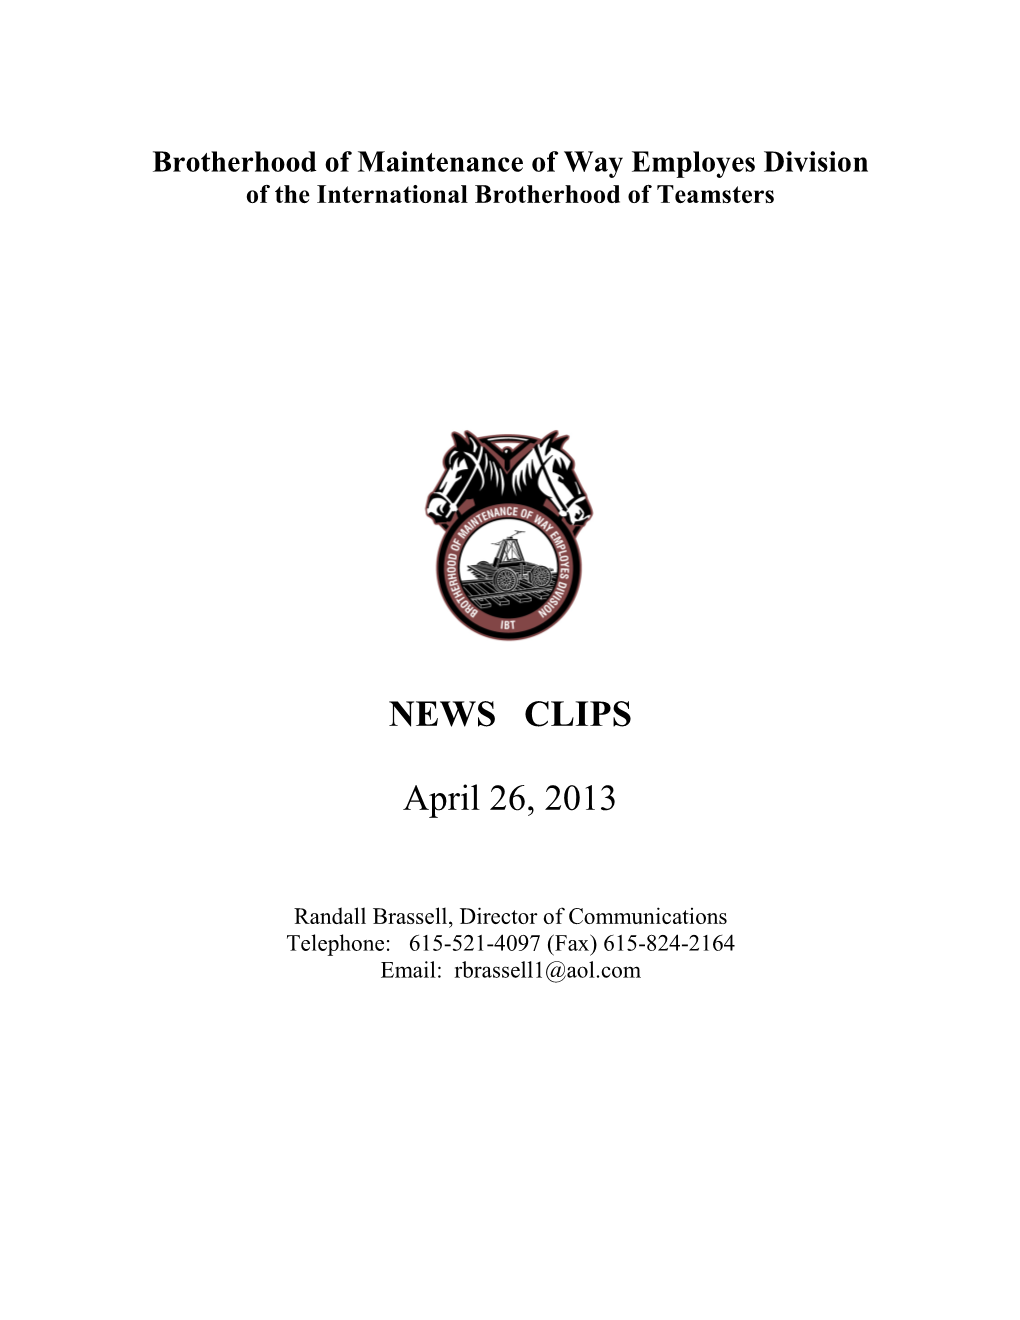 NEWS CLIPS April 26, 2013